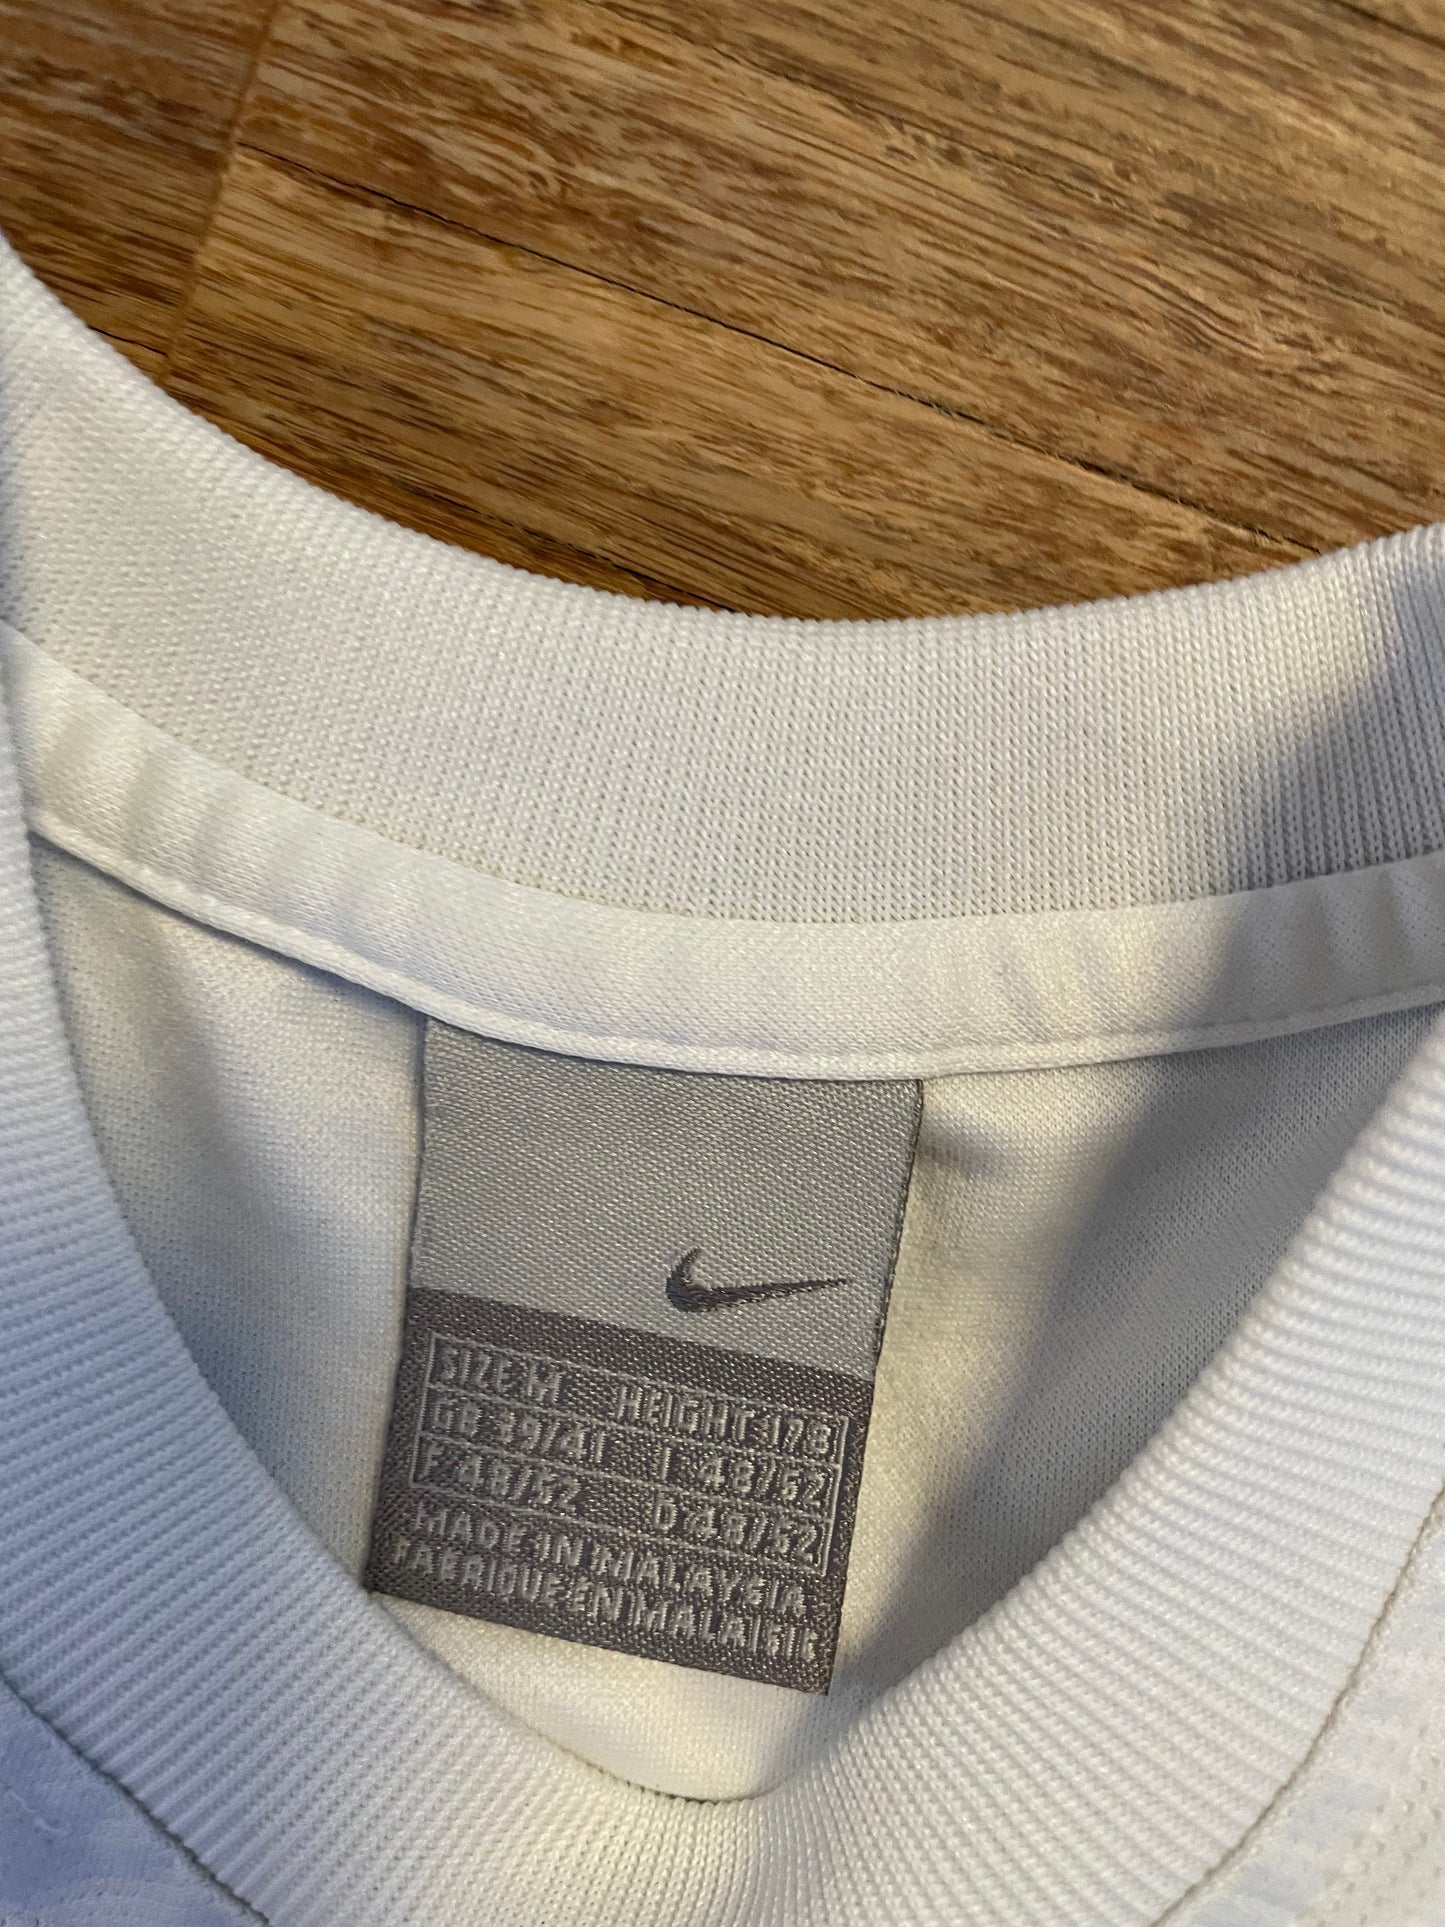 Nike Tn t-Shirt (M)